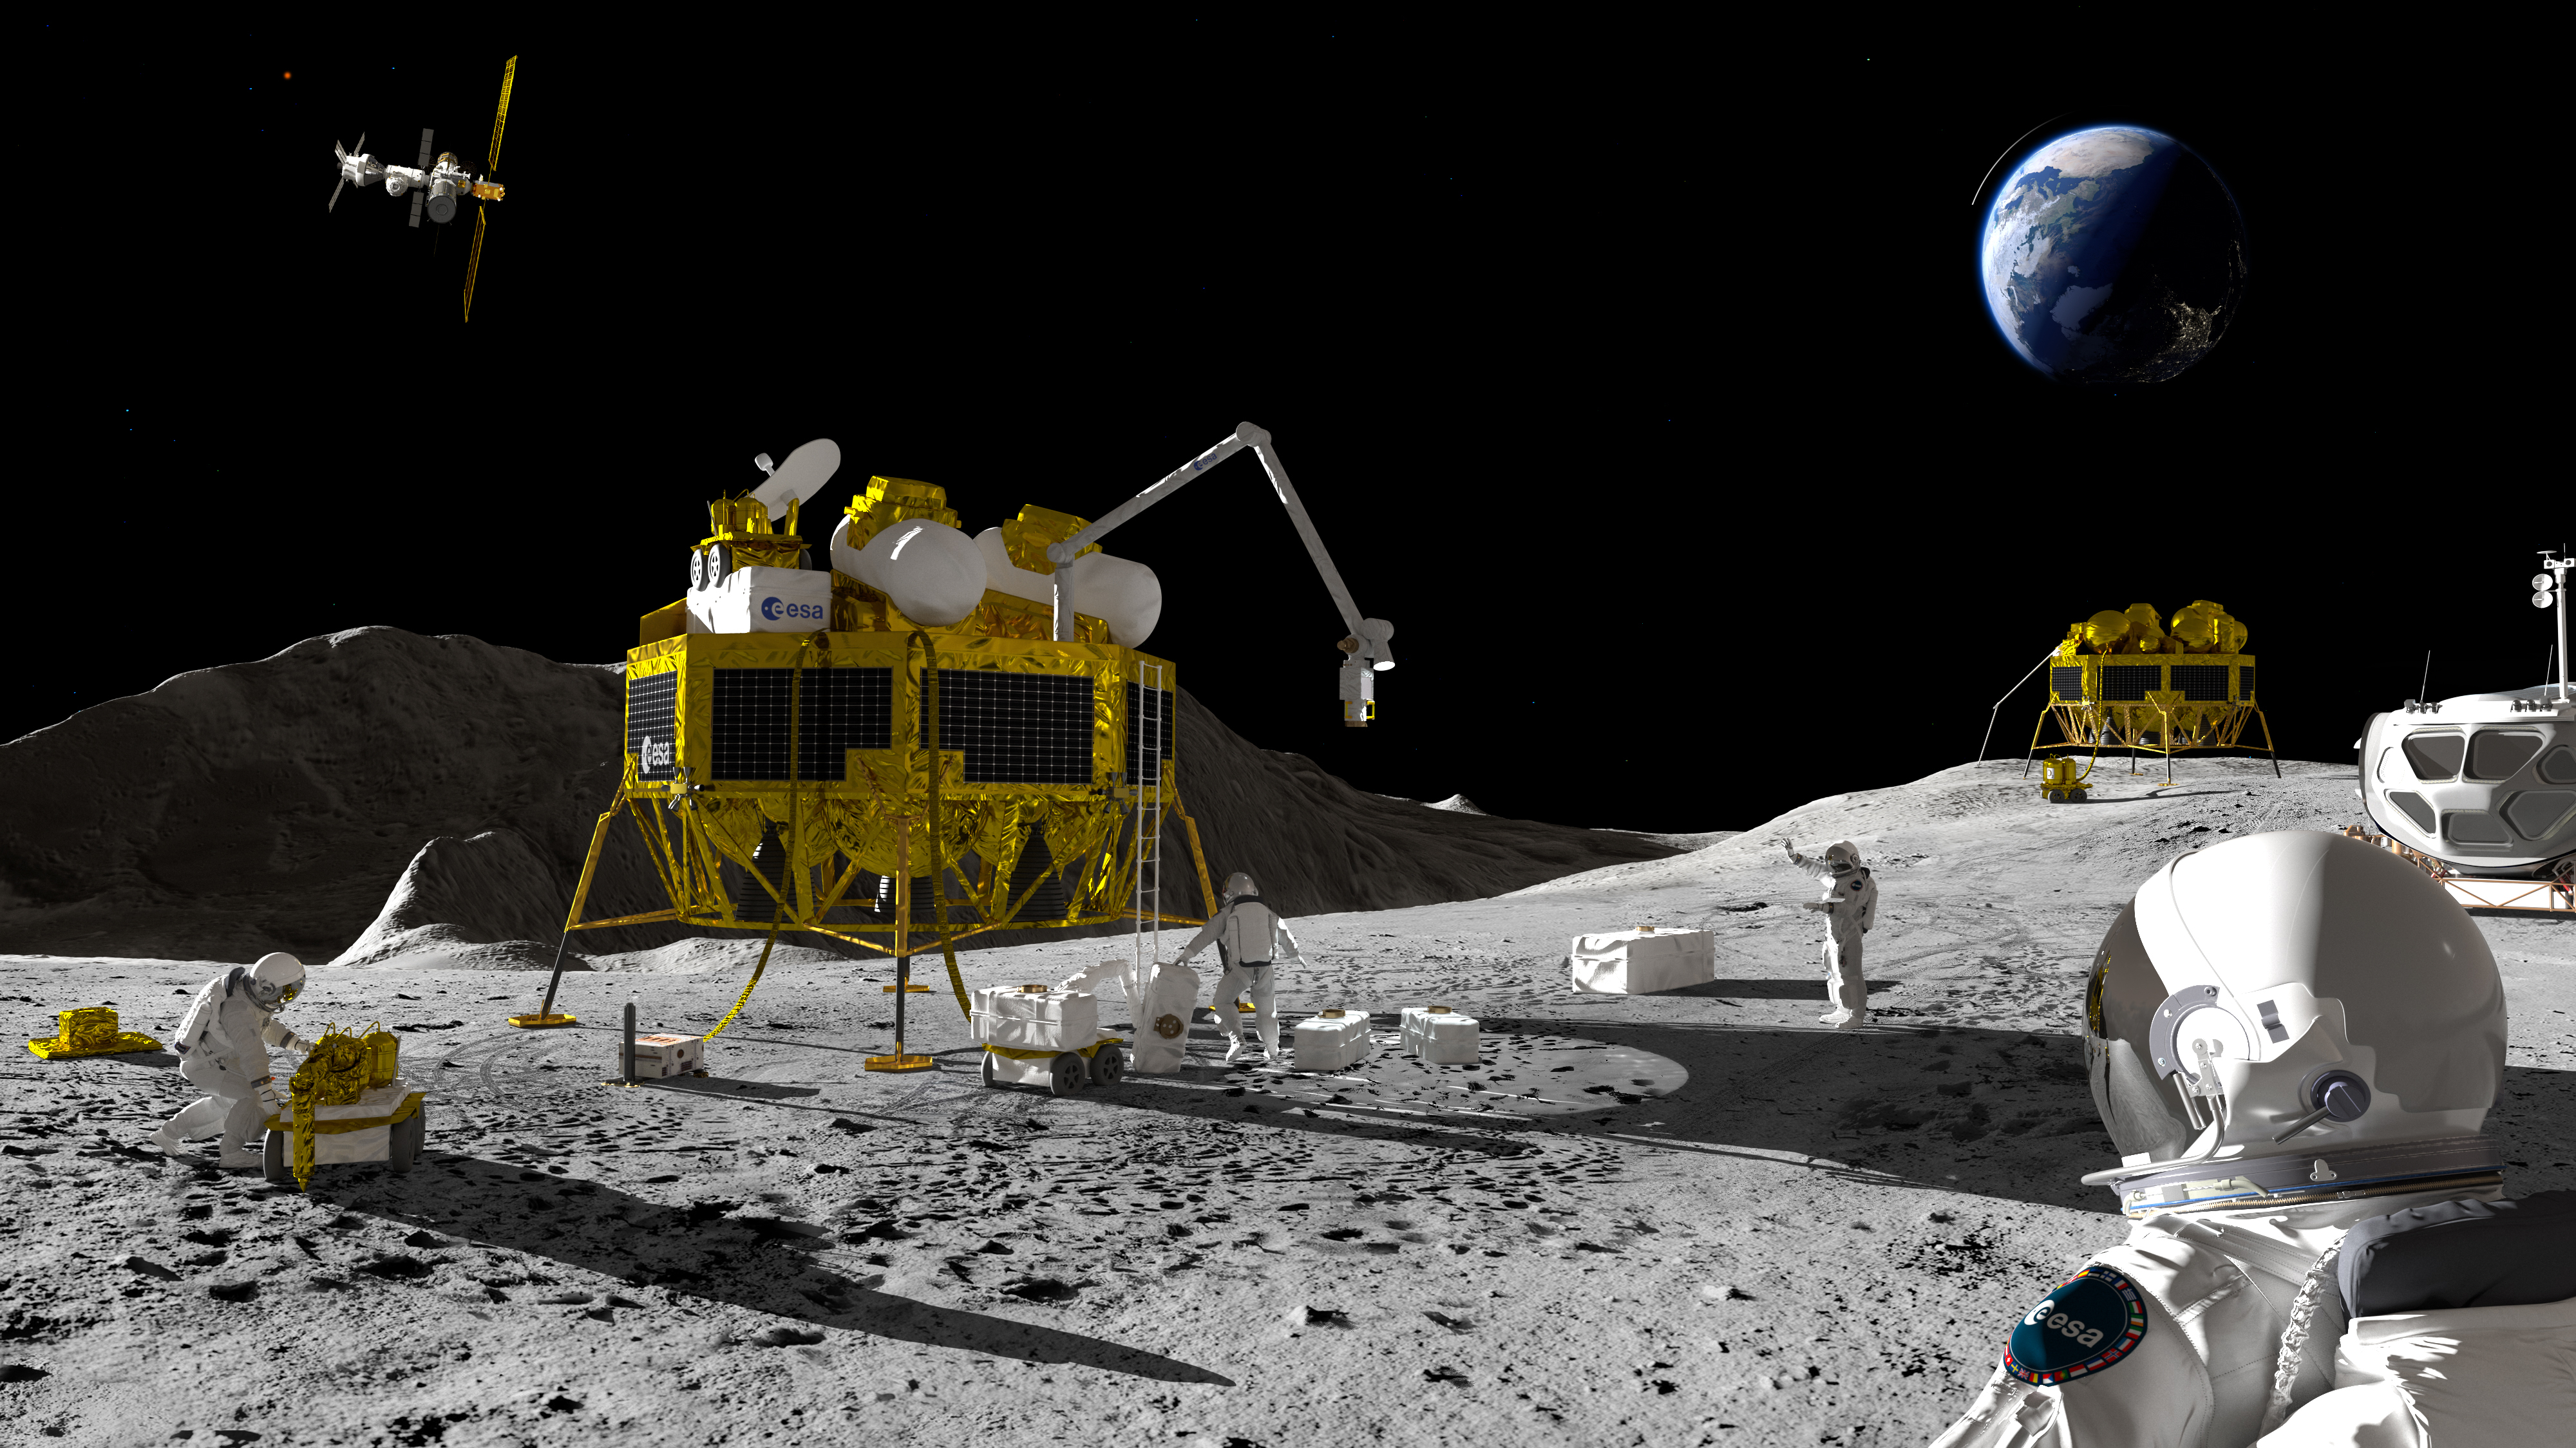  Europe on the moon: ESA targeting 2031 for 1st 'Argonaut' lunar lander mission 